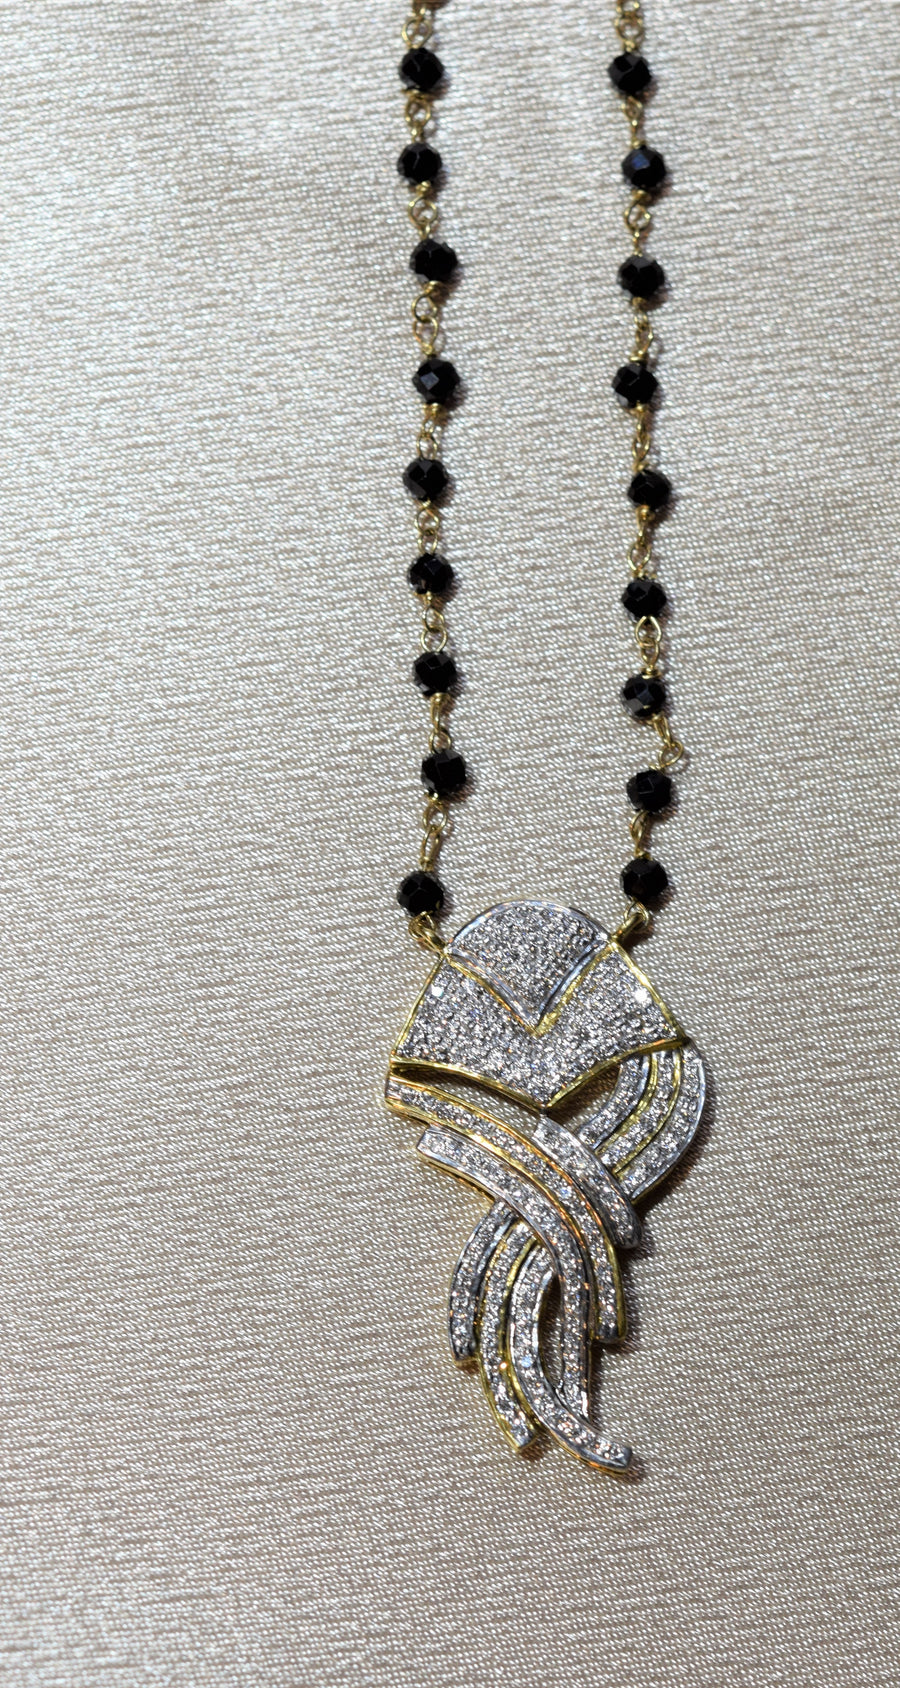 Medusa Design Diamond Pendant - $1800